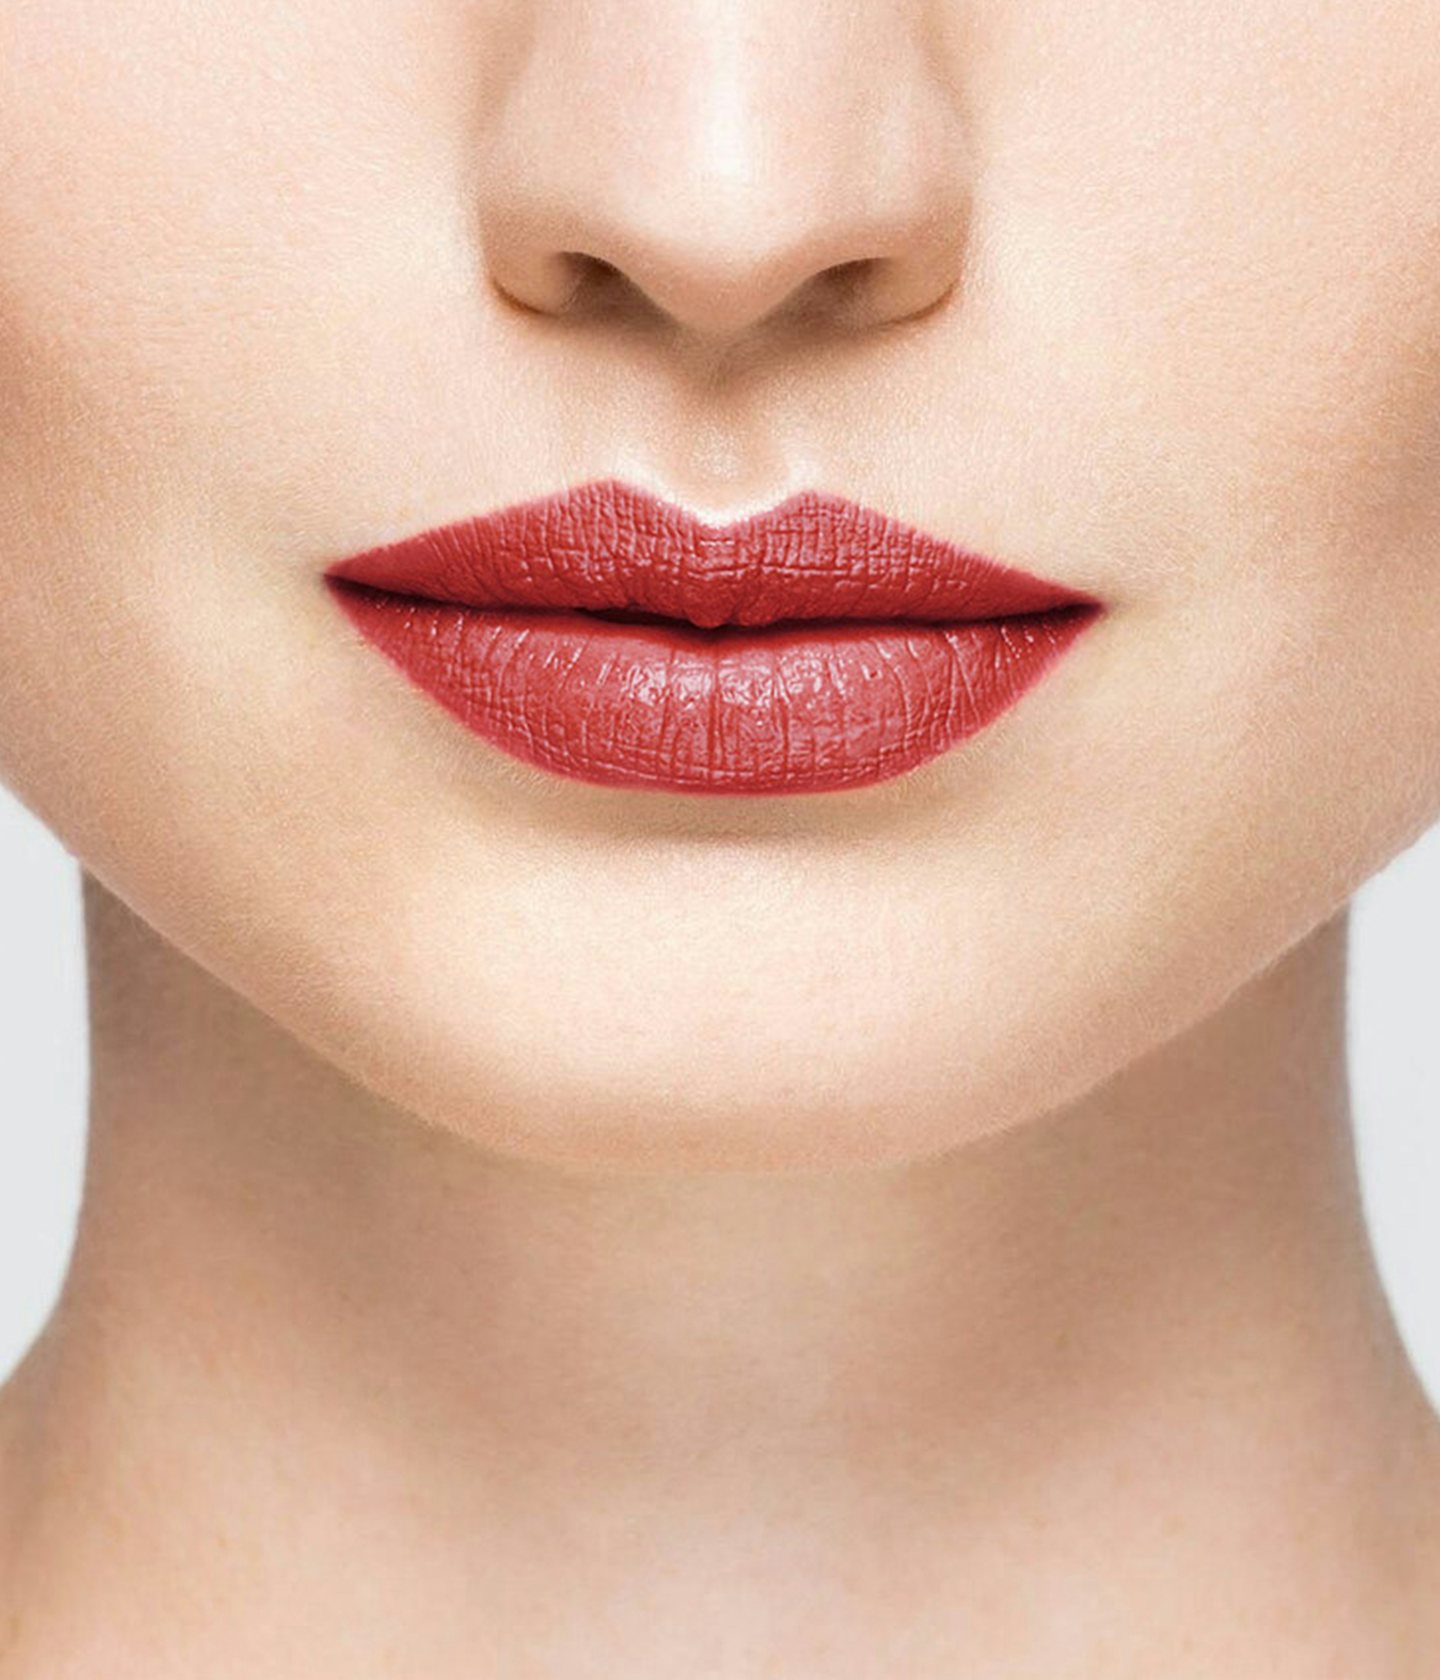 La bouche rouge SW1X lipstick shade on the lips of a fair skin model